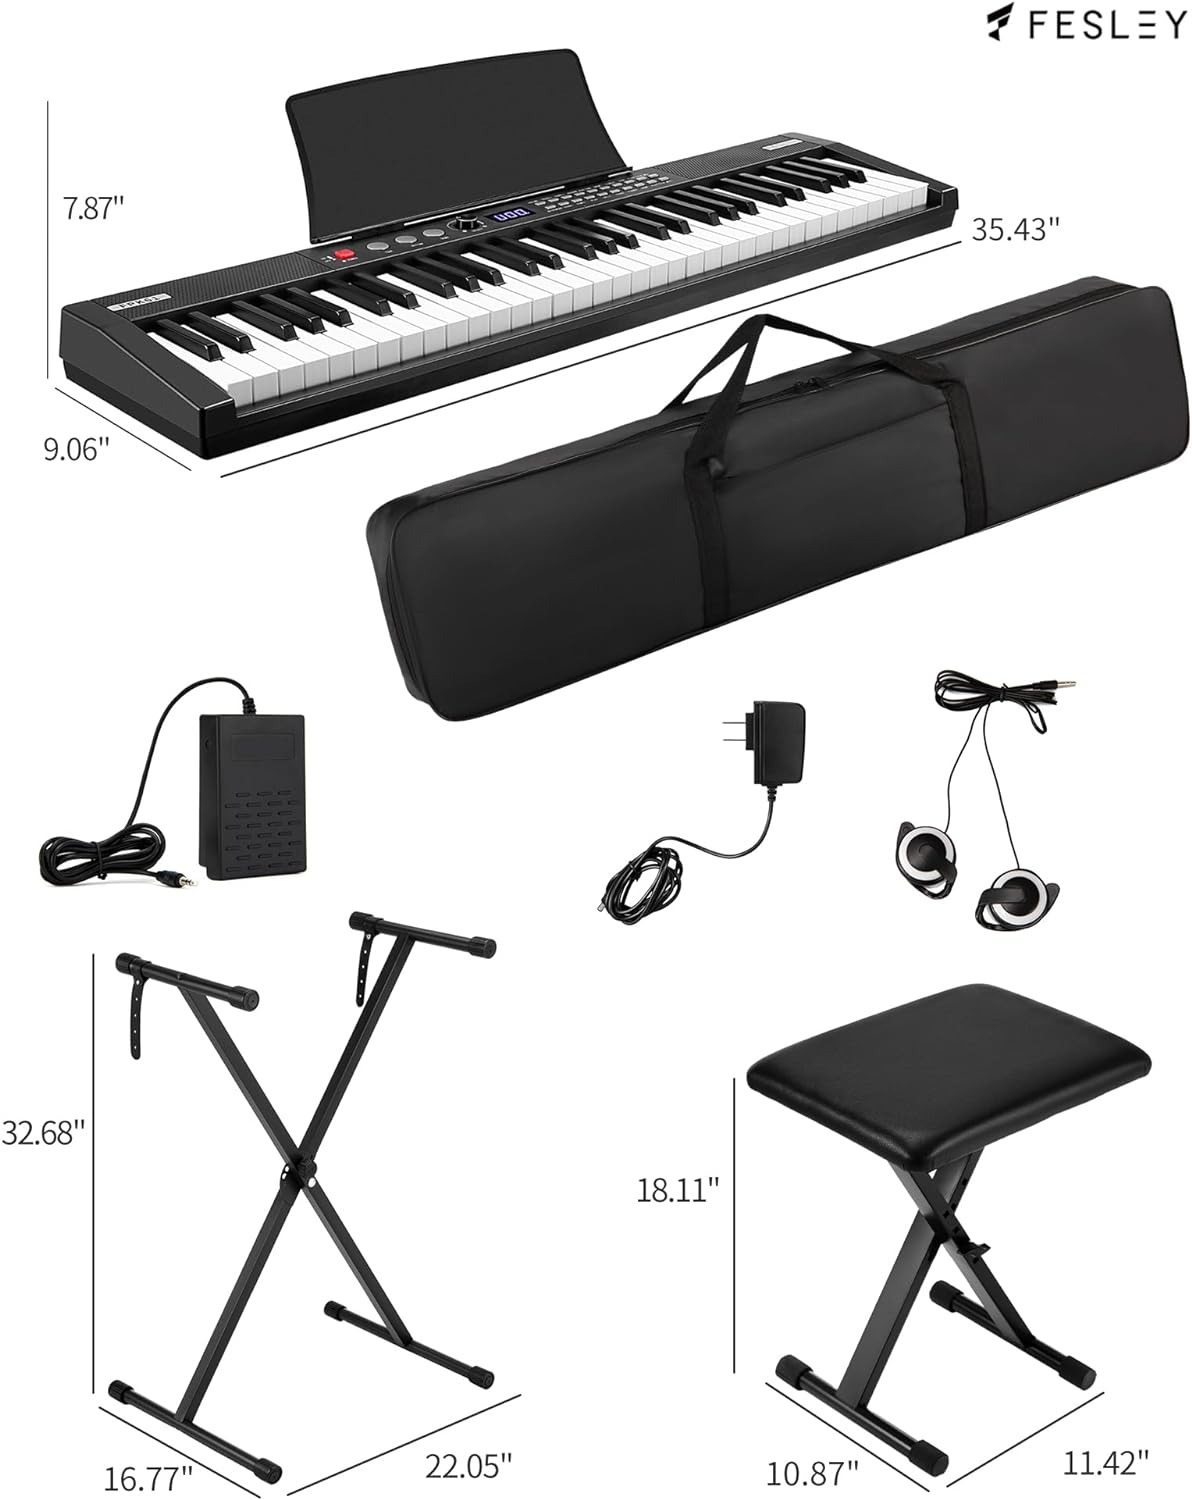 Fesley FPK61 Portable Electronic Piano 61 Keys Keyboard Kit 